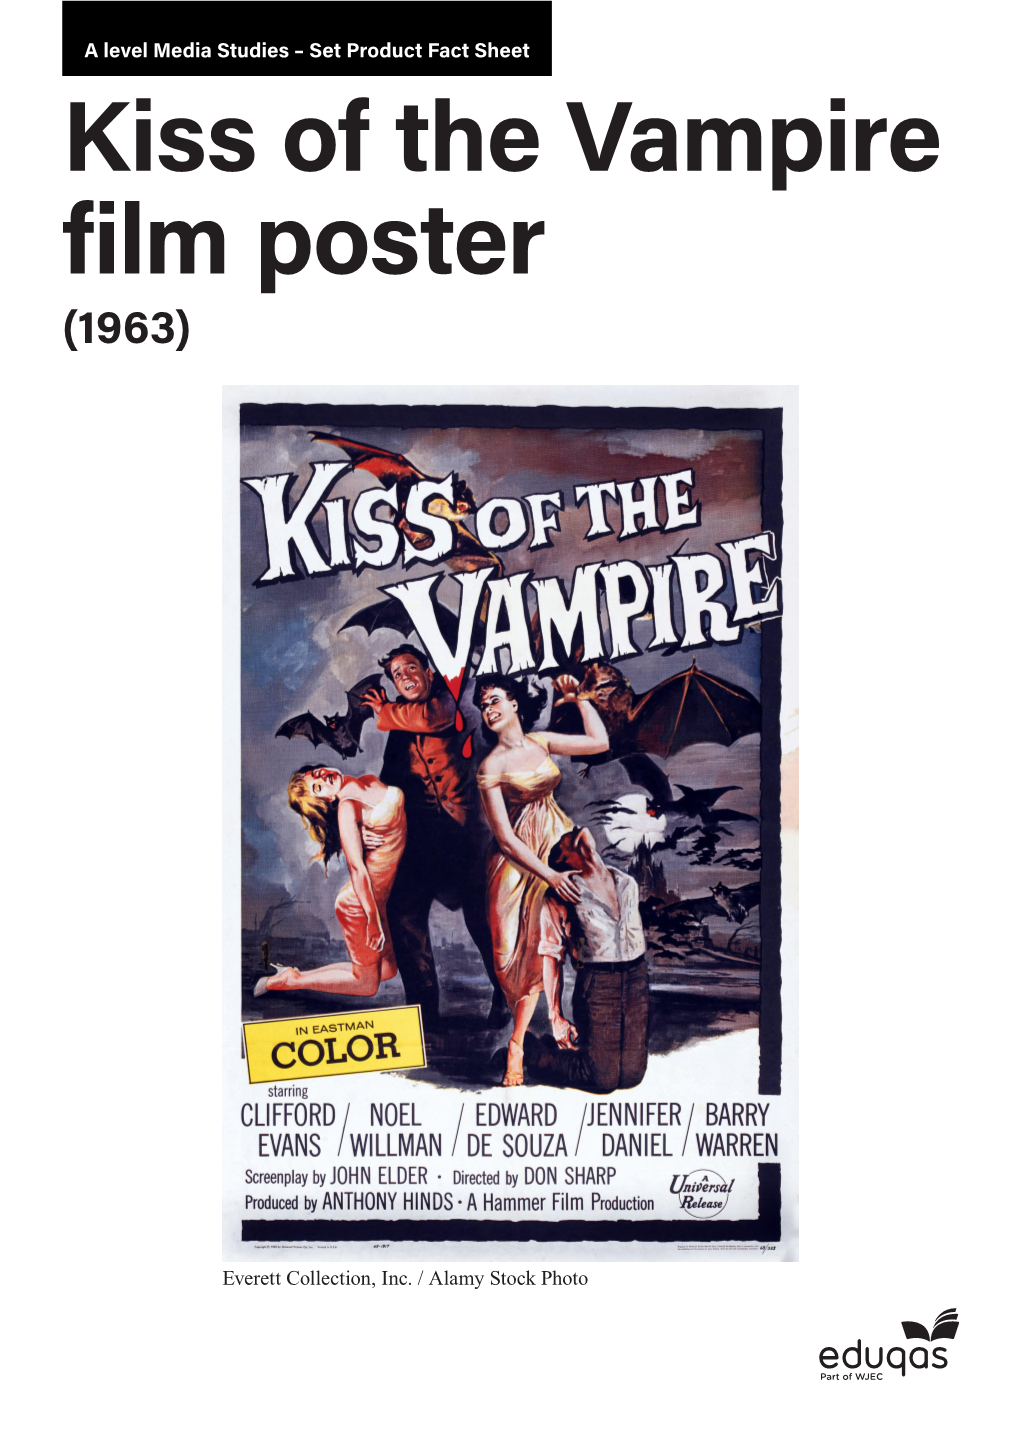 Kiss of the Vampire Film Poster (1963)